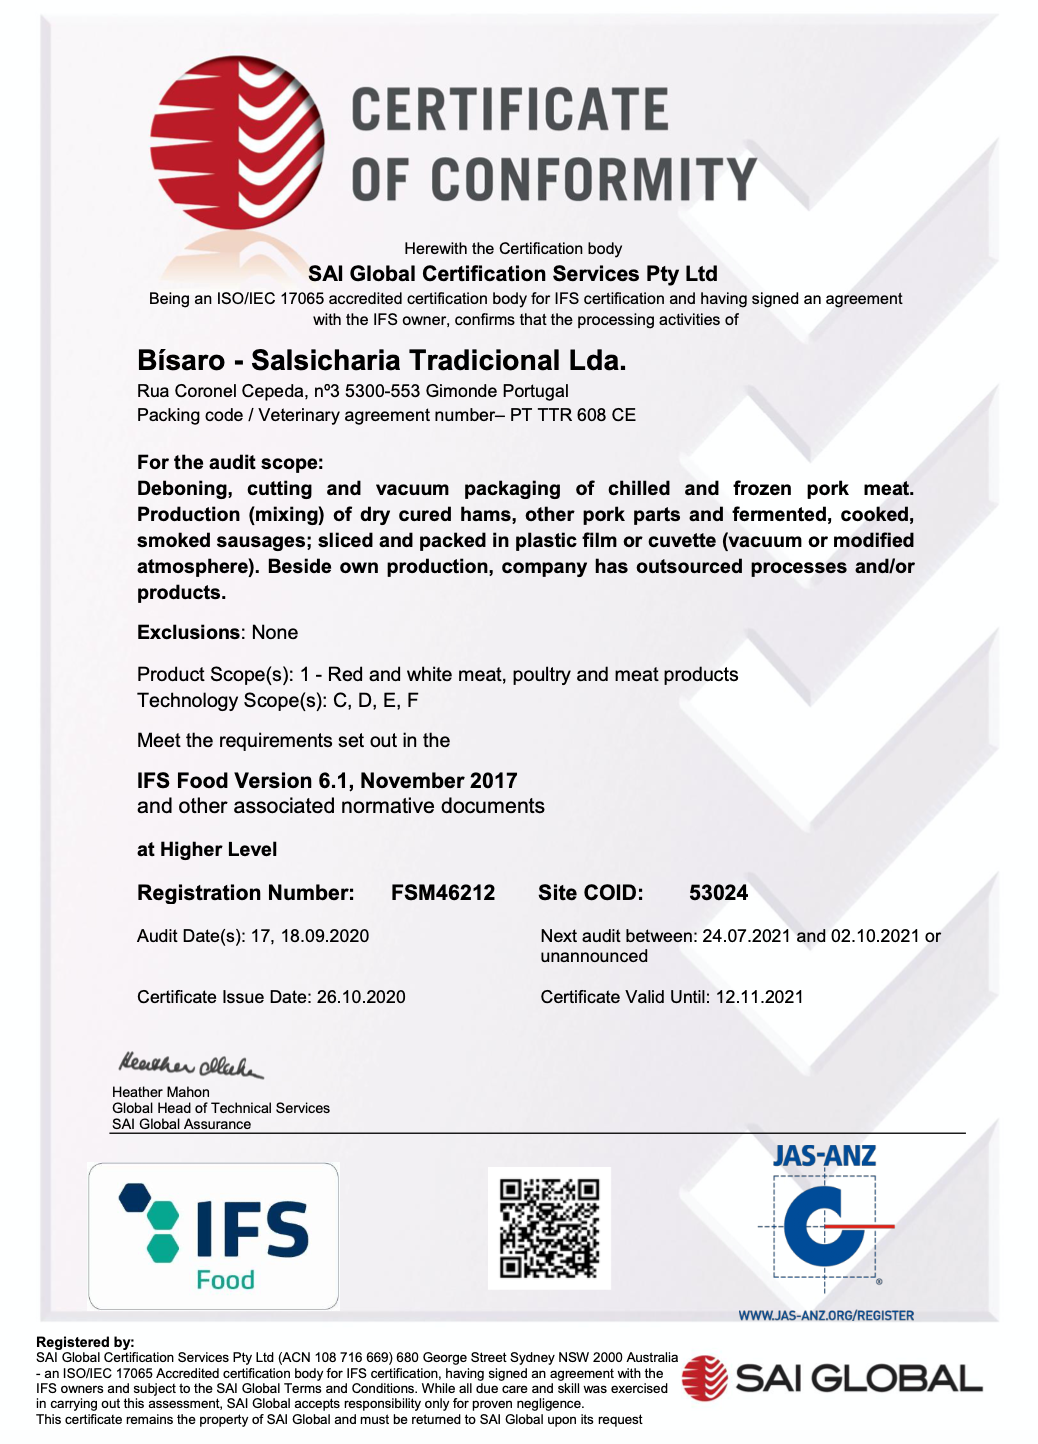 Certificação IFS - Food 2020